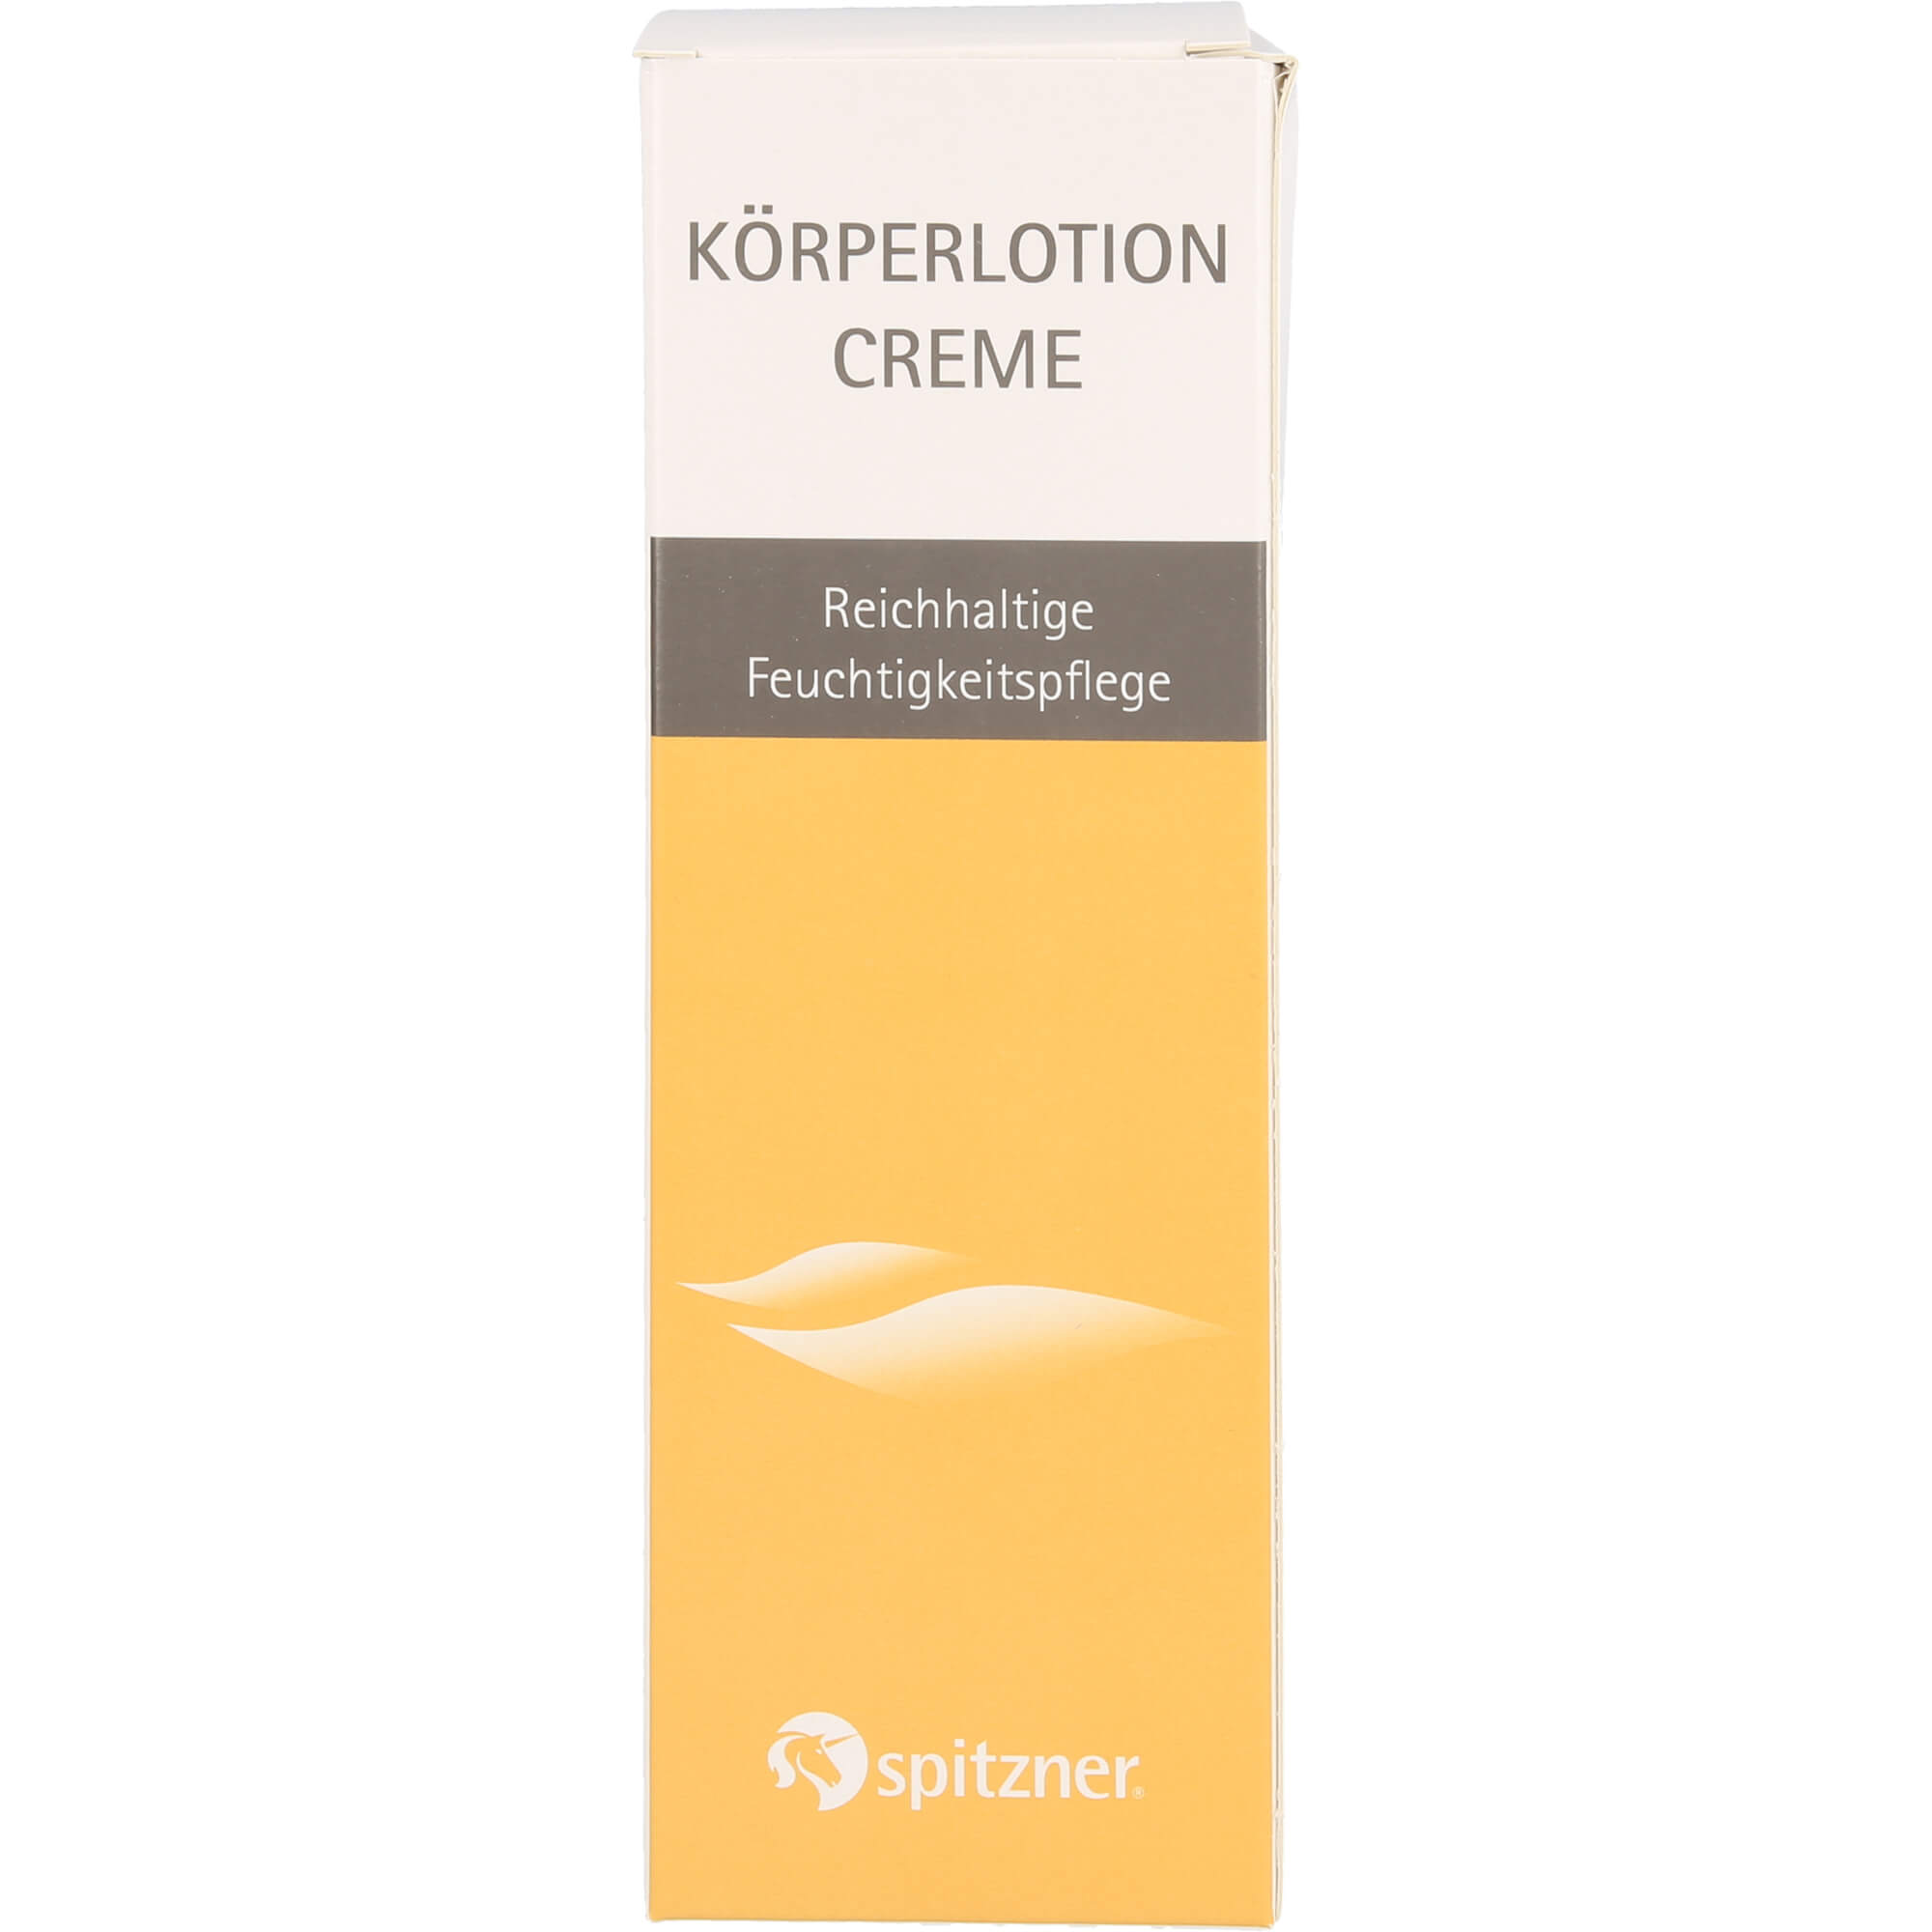 SPITZNER-Koerperlotion-Creme